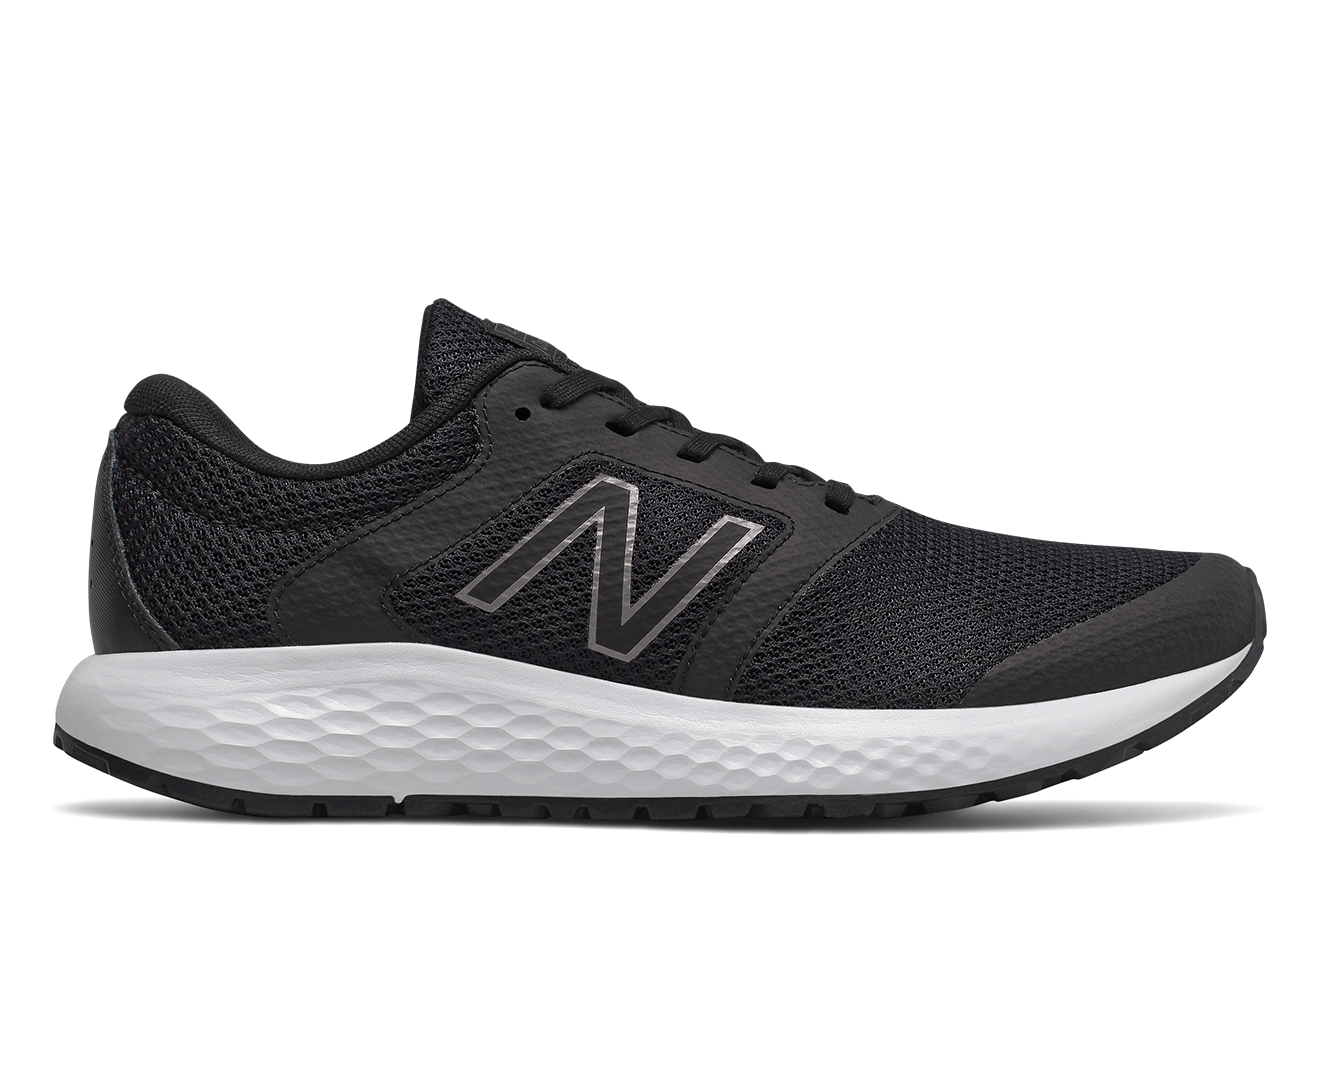 New Balance Men's 420 Wide Fit Running Shoes - Black | Catch.com.au